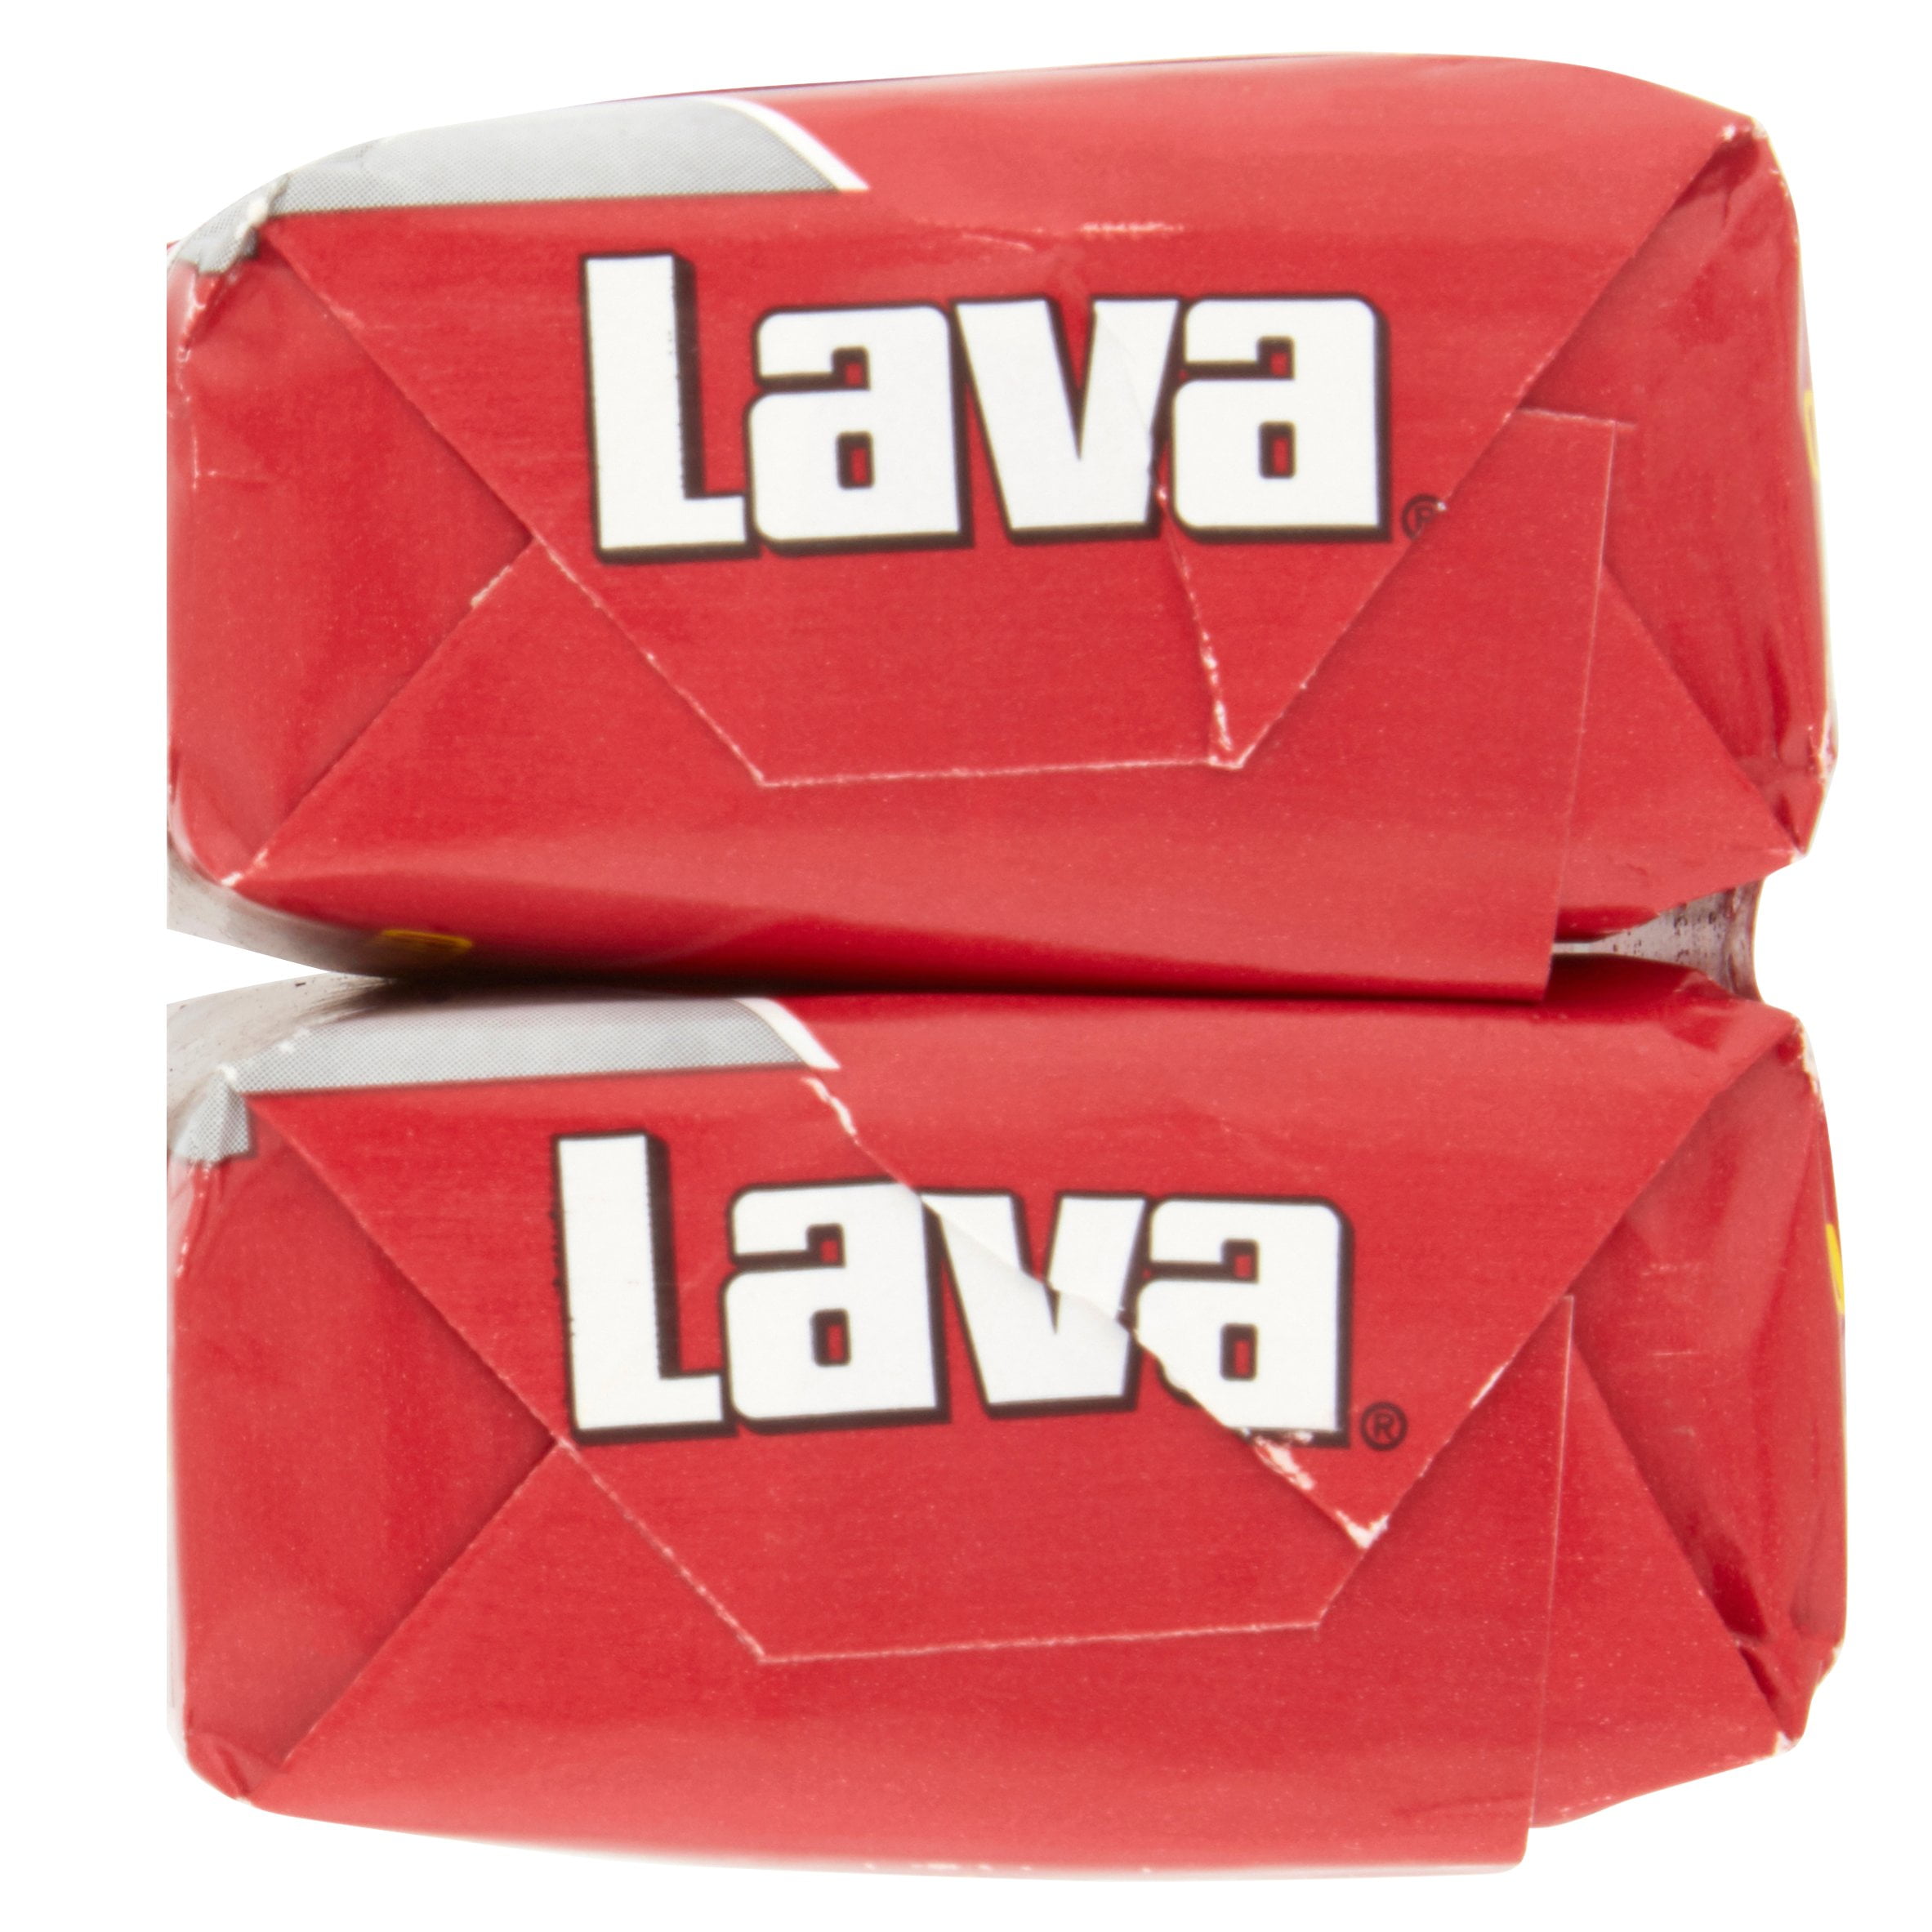 Lava 10383 Hand Soap, Unscented Bar, 4oz, 48/Carton